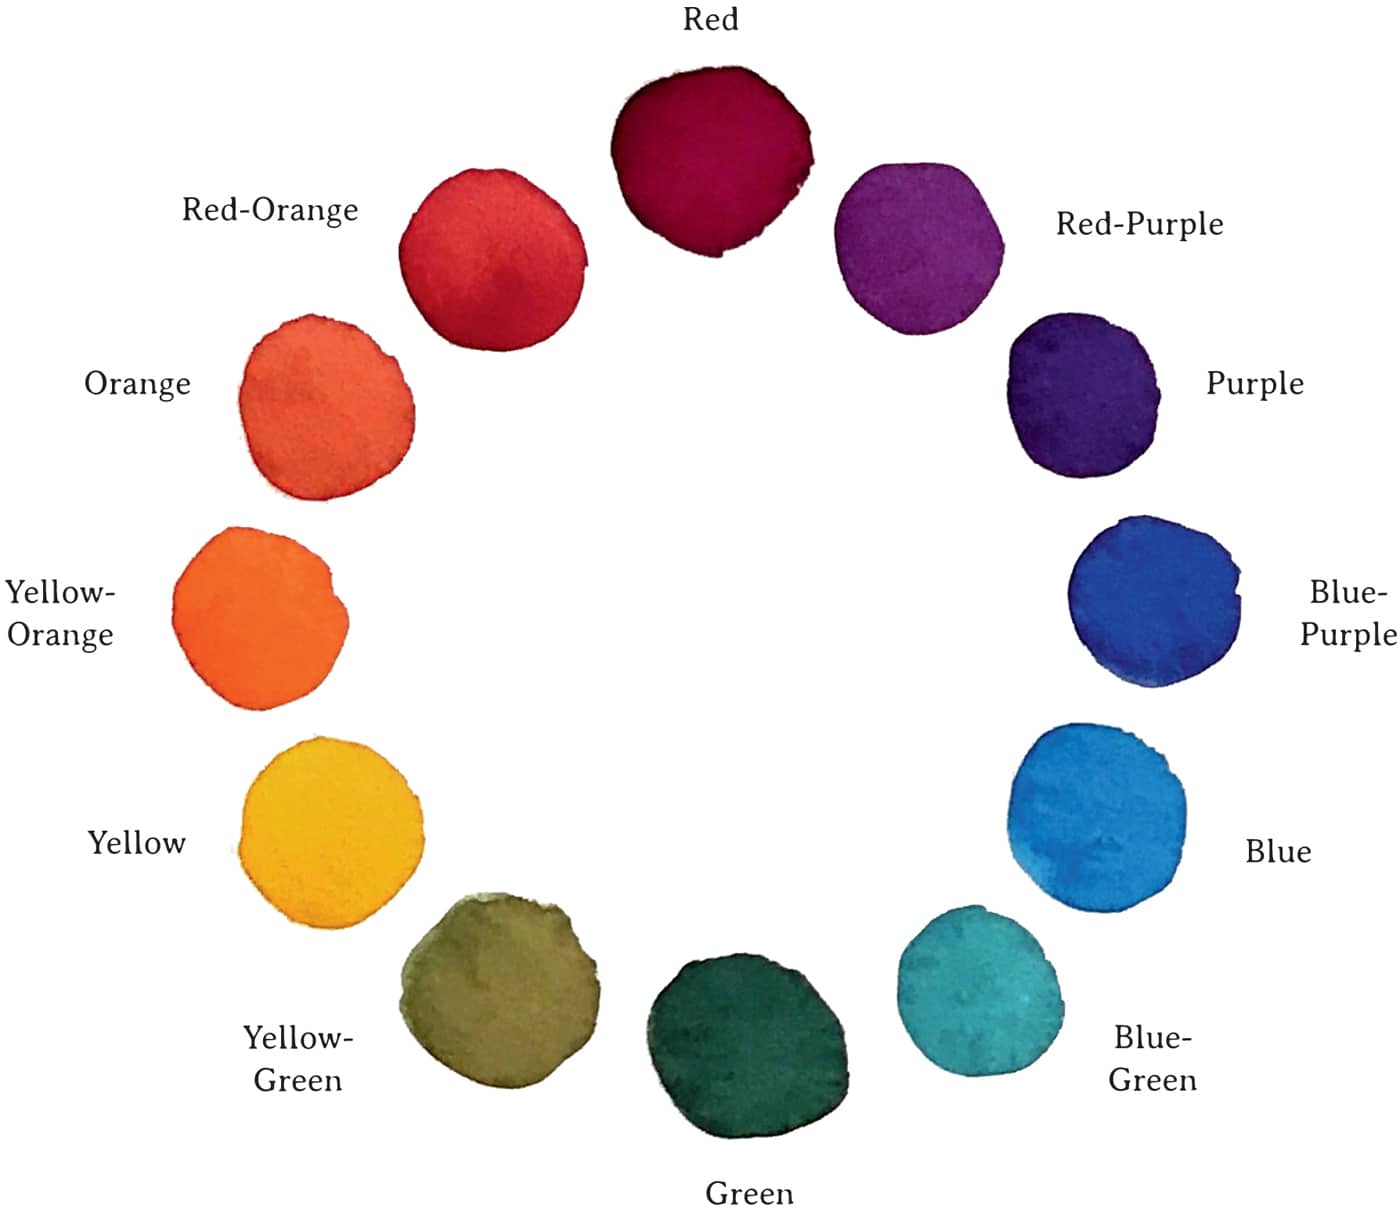 Red Red-Purple Purple Blue-Purple Blue Blue-Green Green Yellow-Green Yellow Yellow-Orange Orange Red-Orange